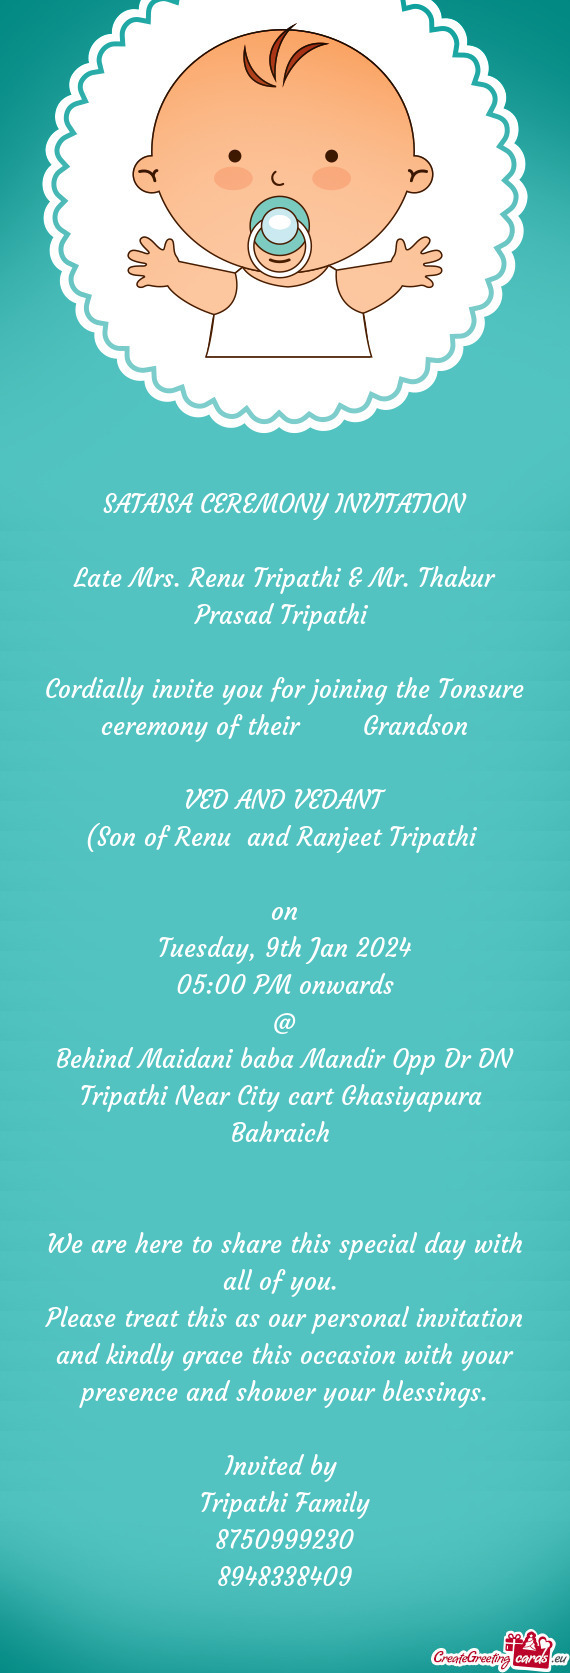 Late Mrs. Renu Tripathi & Mr. Thakur Prasad Tripathi